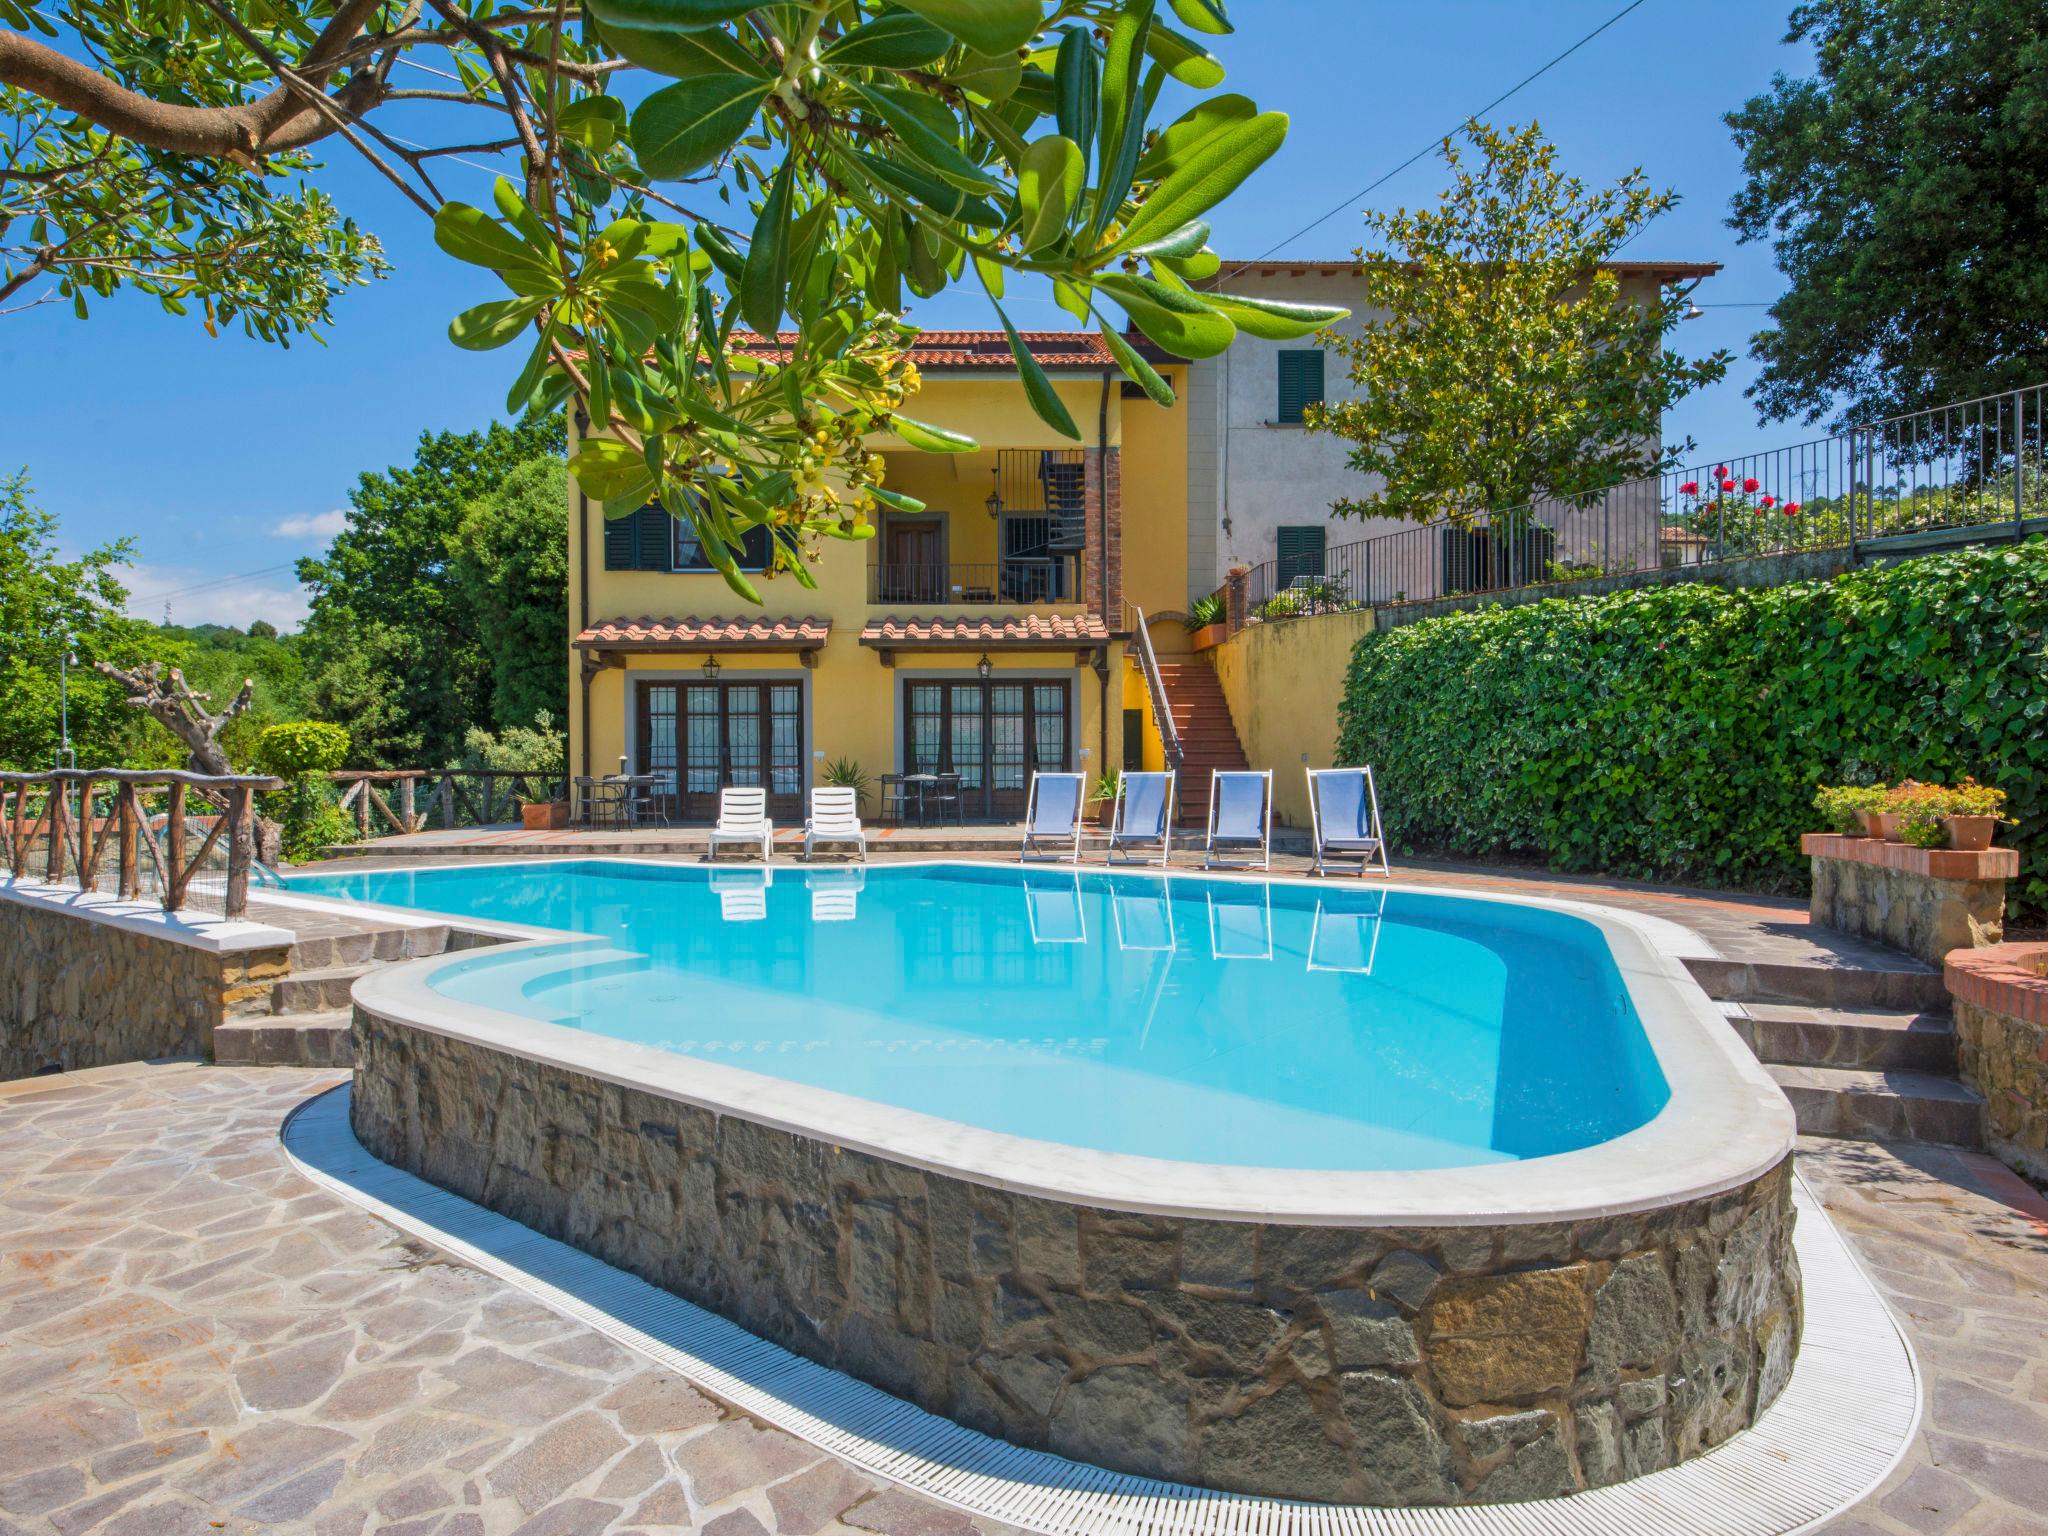 Photo 1 - 1 bedroom Apartment in Lamporecchio with swimming pool